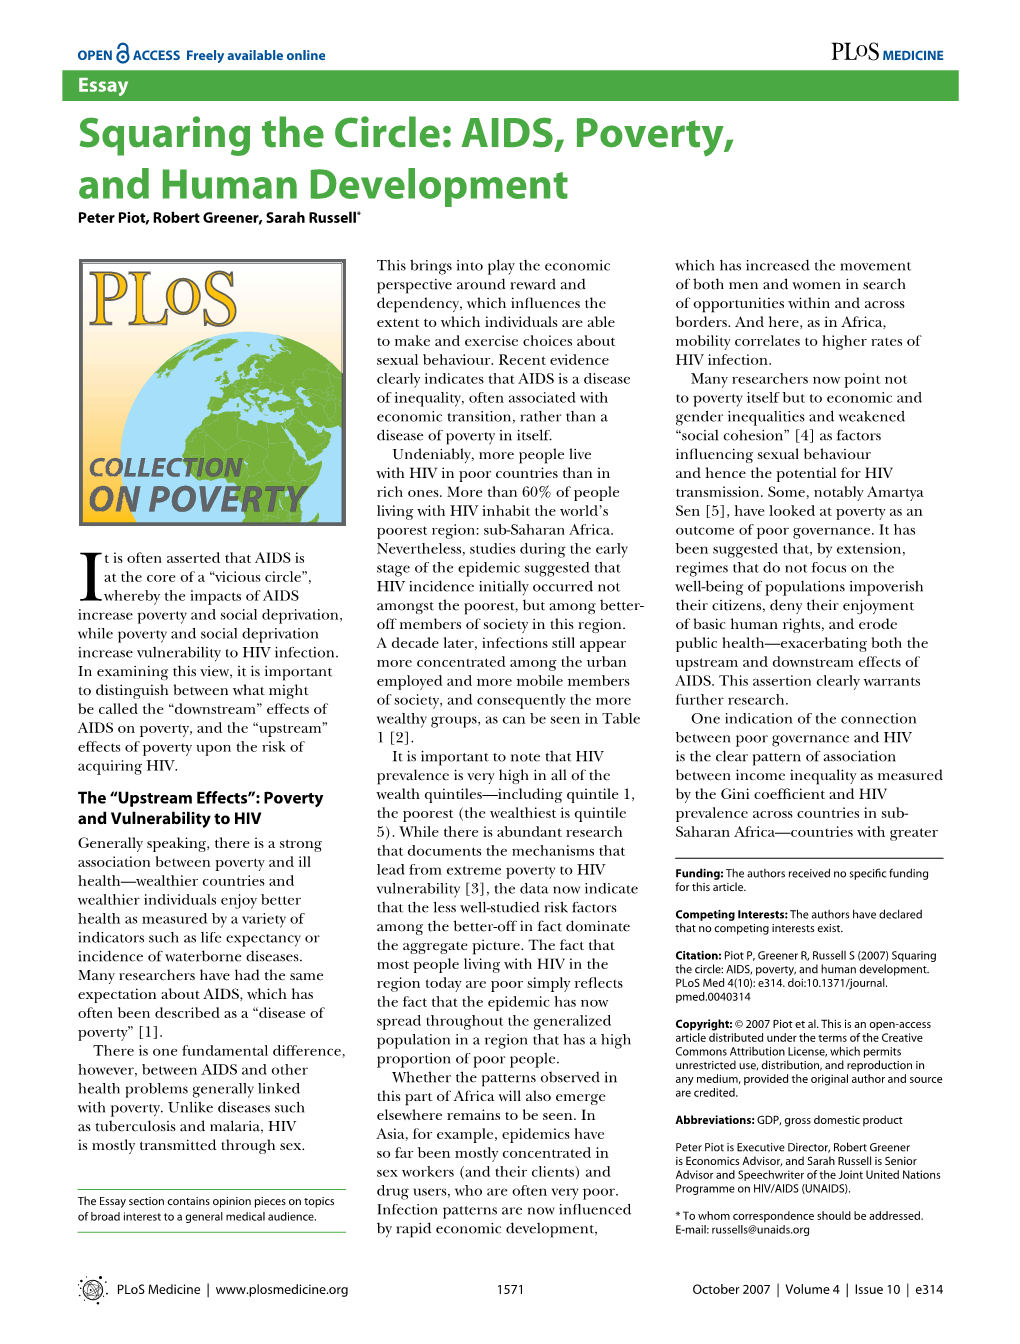 AIDS, Poverty, and Human Development Peter Piot, Robert Greener, Sarah Russell*